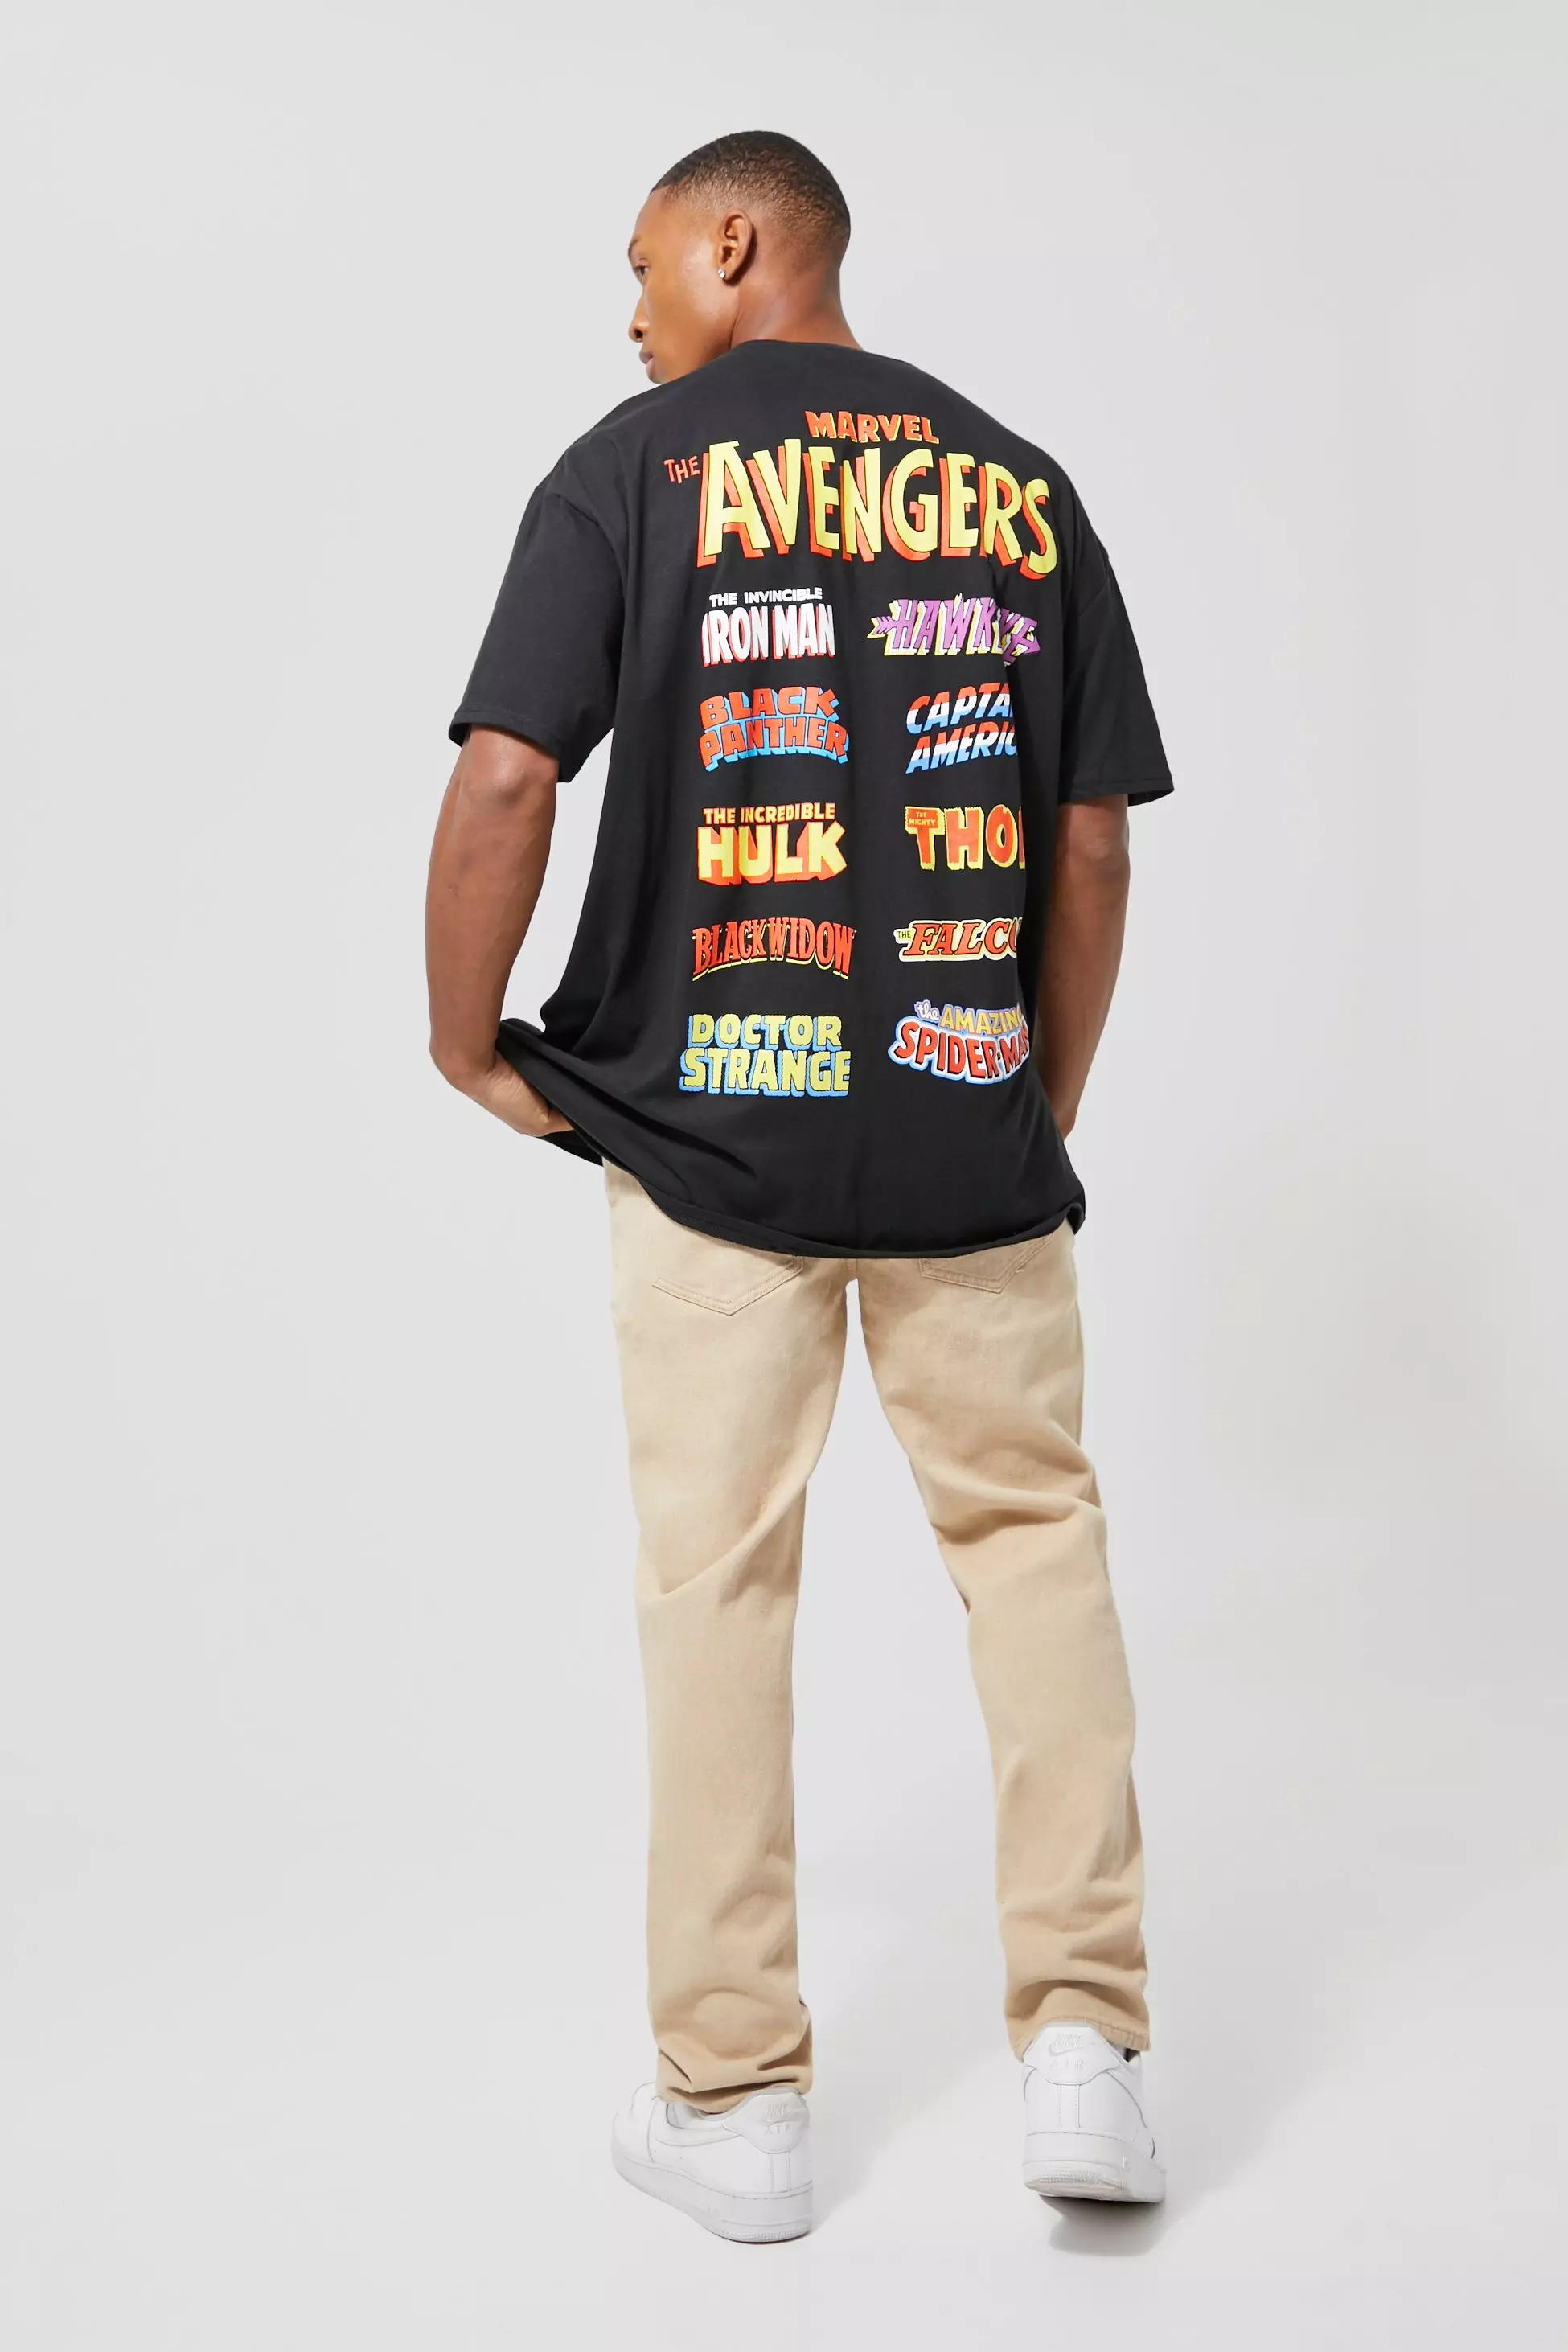 Oversized Marvel Avengers | T-shirt License USA boohooMAN